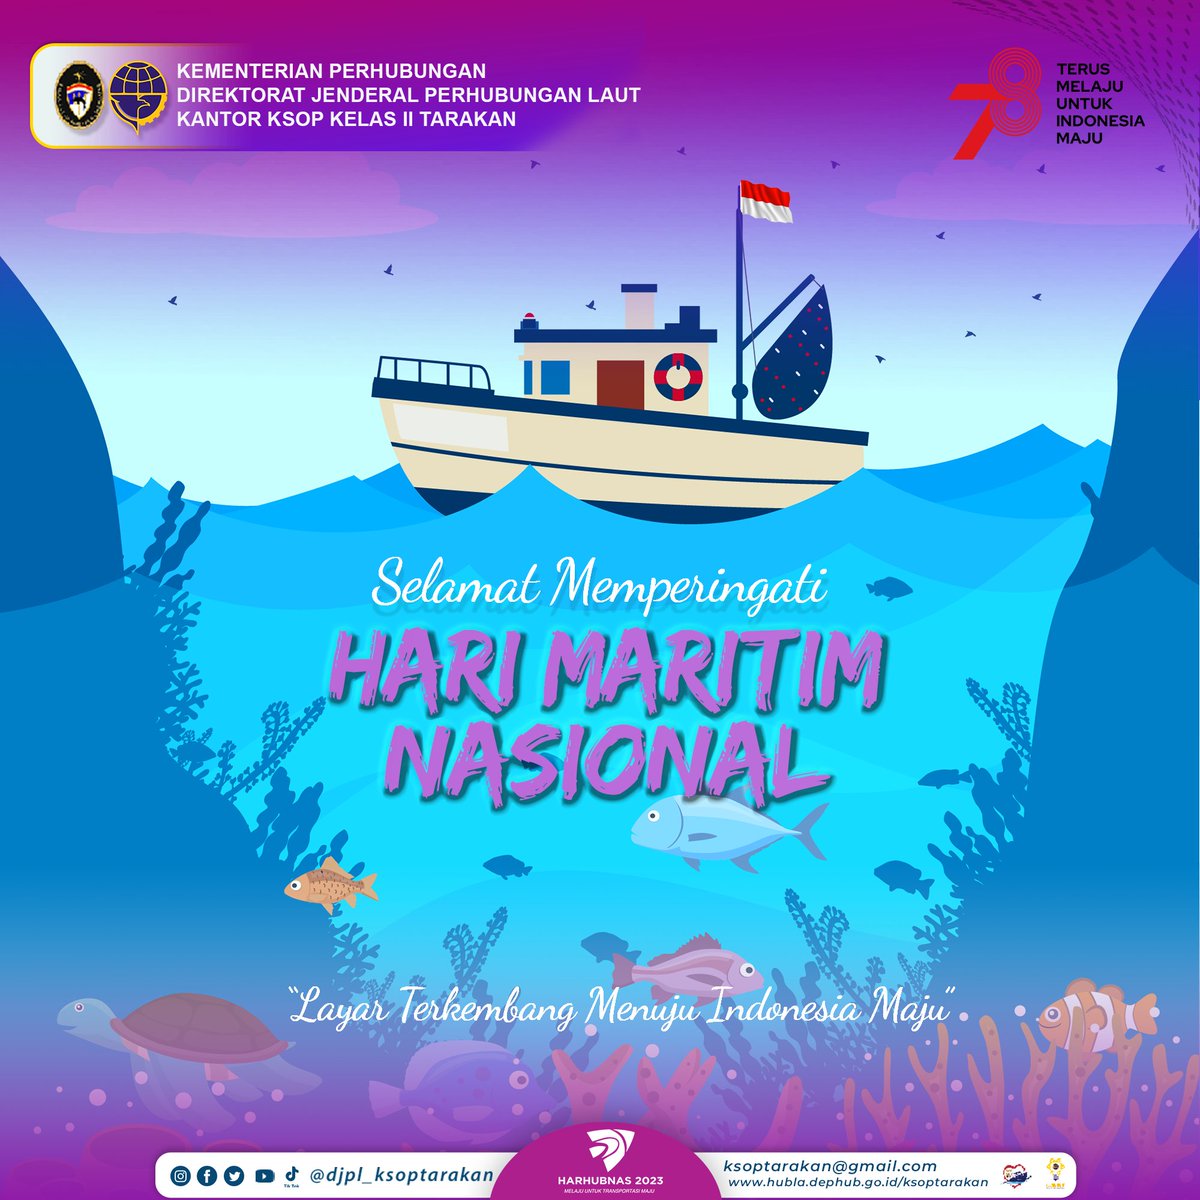 Selamat Hari Maritim Nasional Ke- 59 tahun 2023
'Layar terkembang menuju Indonesia Maju'

#tidung #disinfektan #SPK2P4 #KPLP #JebolGPS #HARHUBNAS2023#HariMaritimNasional2023